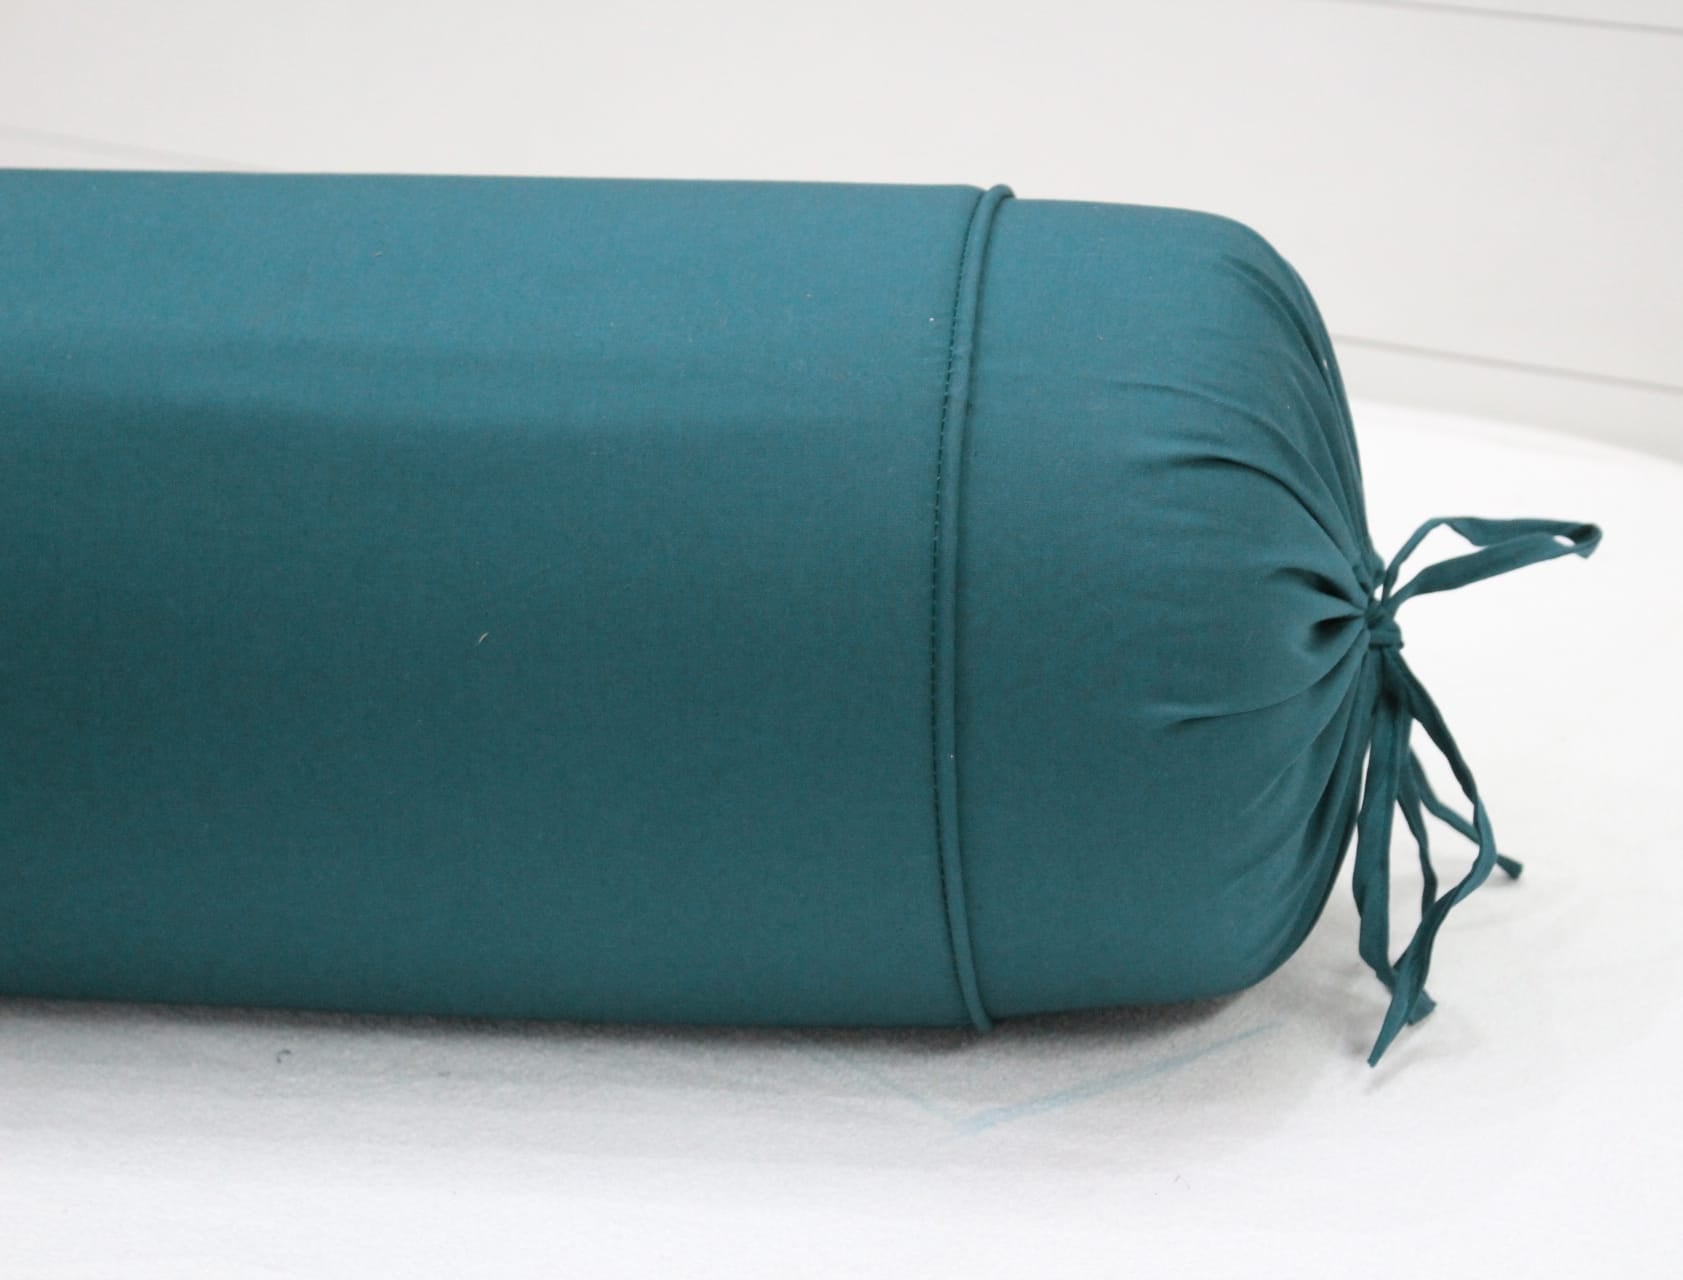 Comfortable Plain Cotton Bolster Cover Set 2pcs in Peacock Blue online